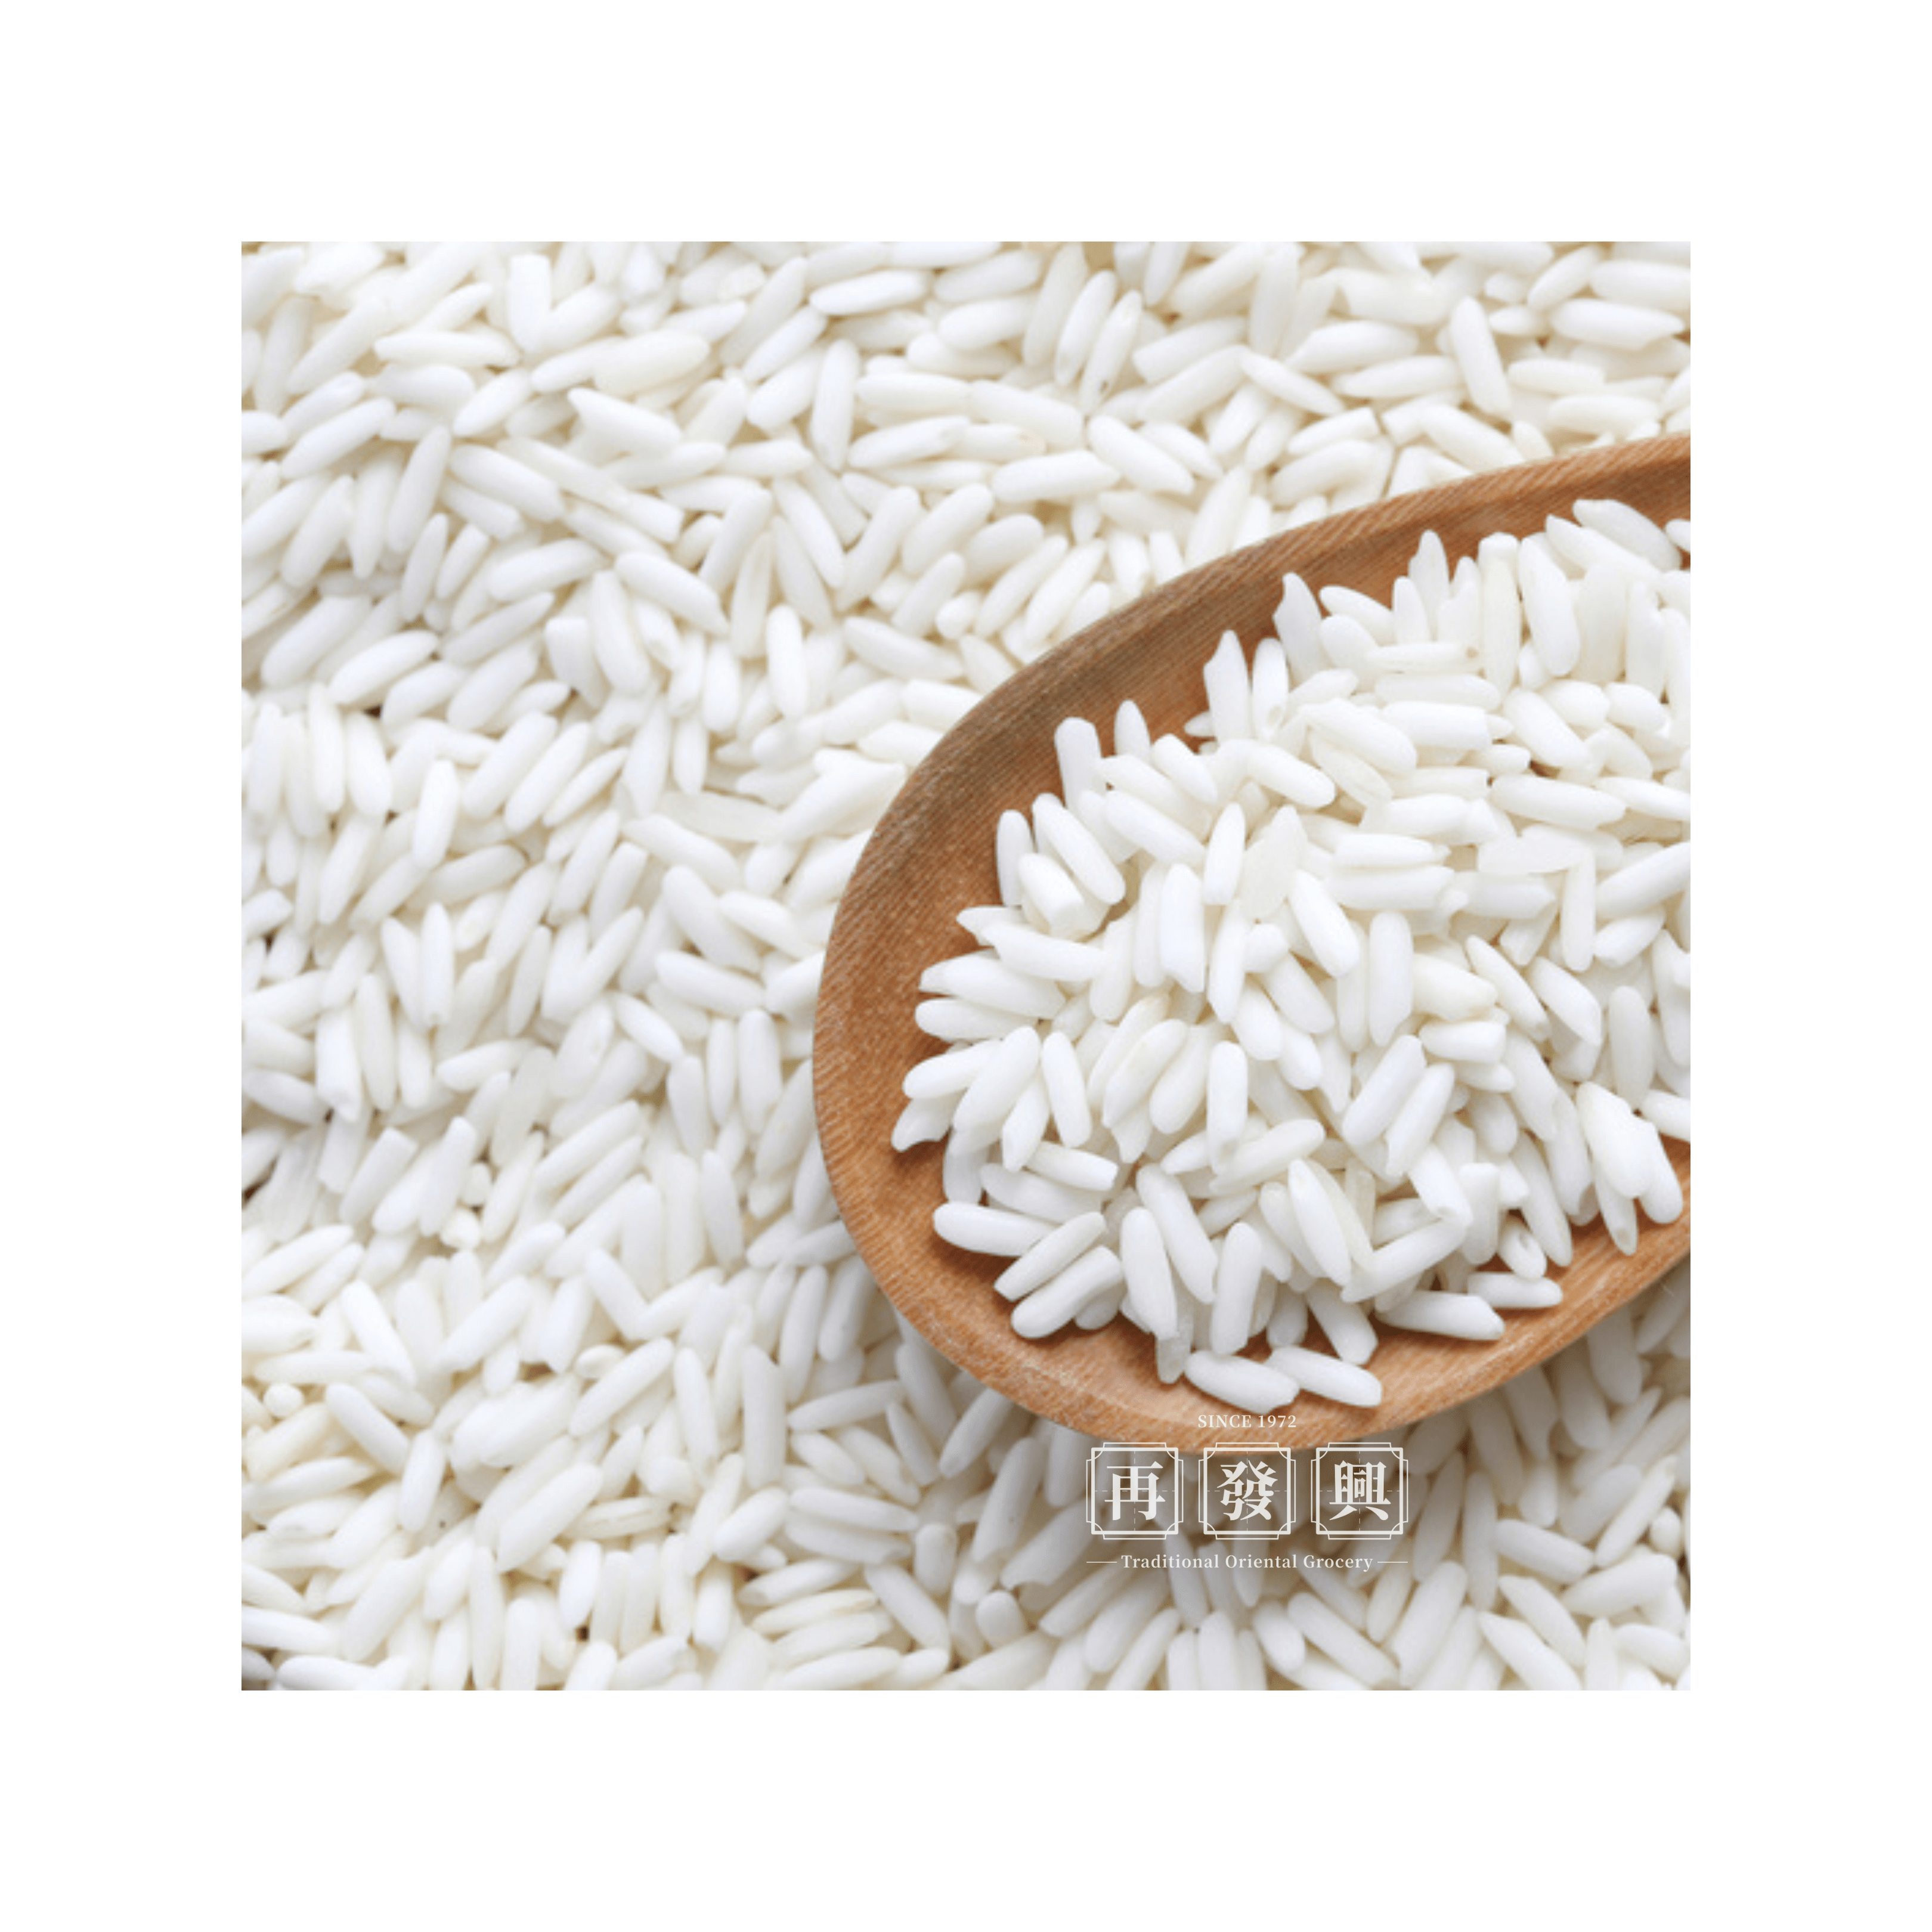 Thailand Glutinous Rice AA (Pulut Putih Susu) 1kg